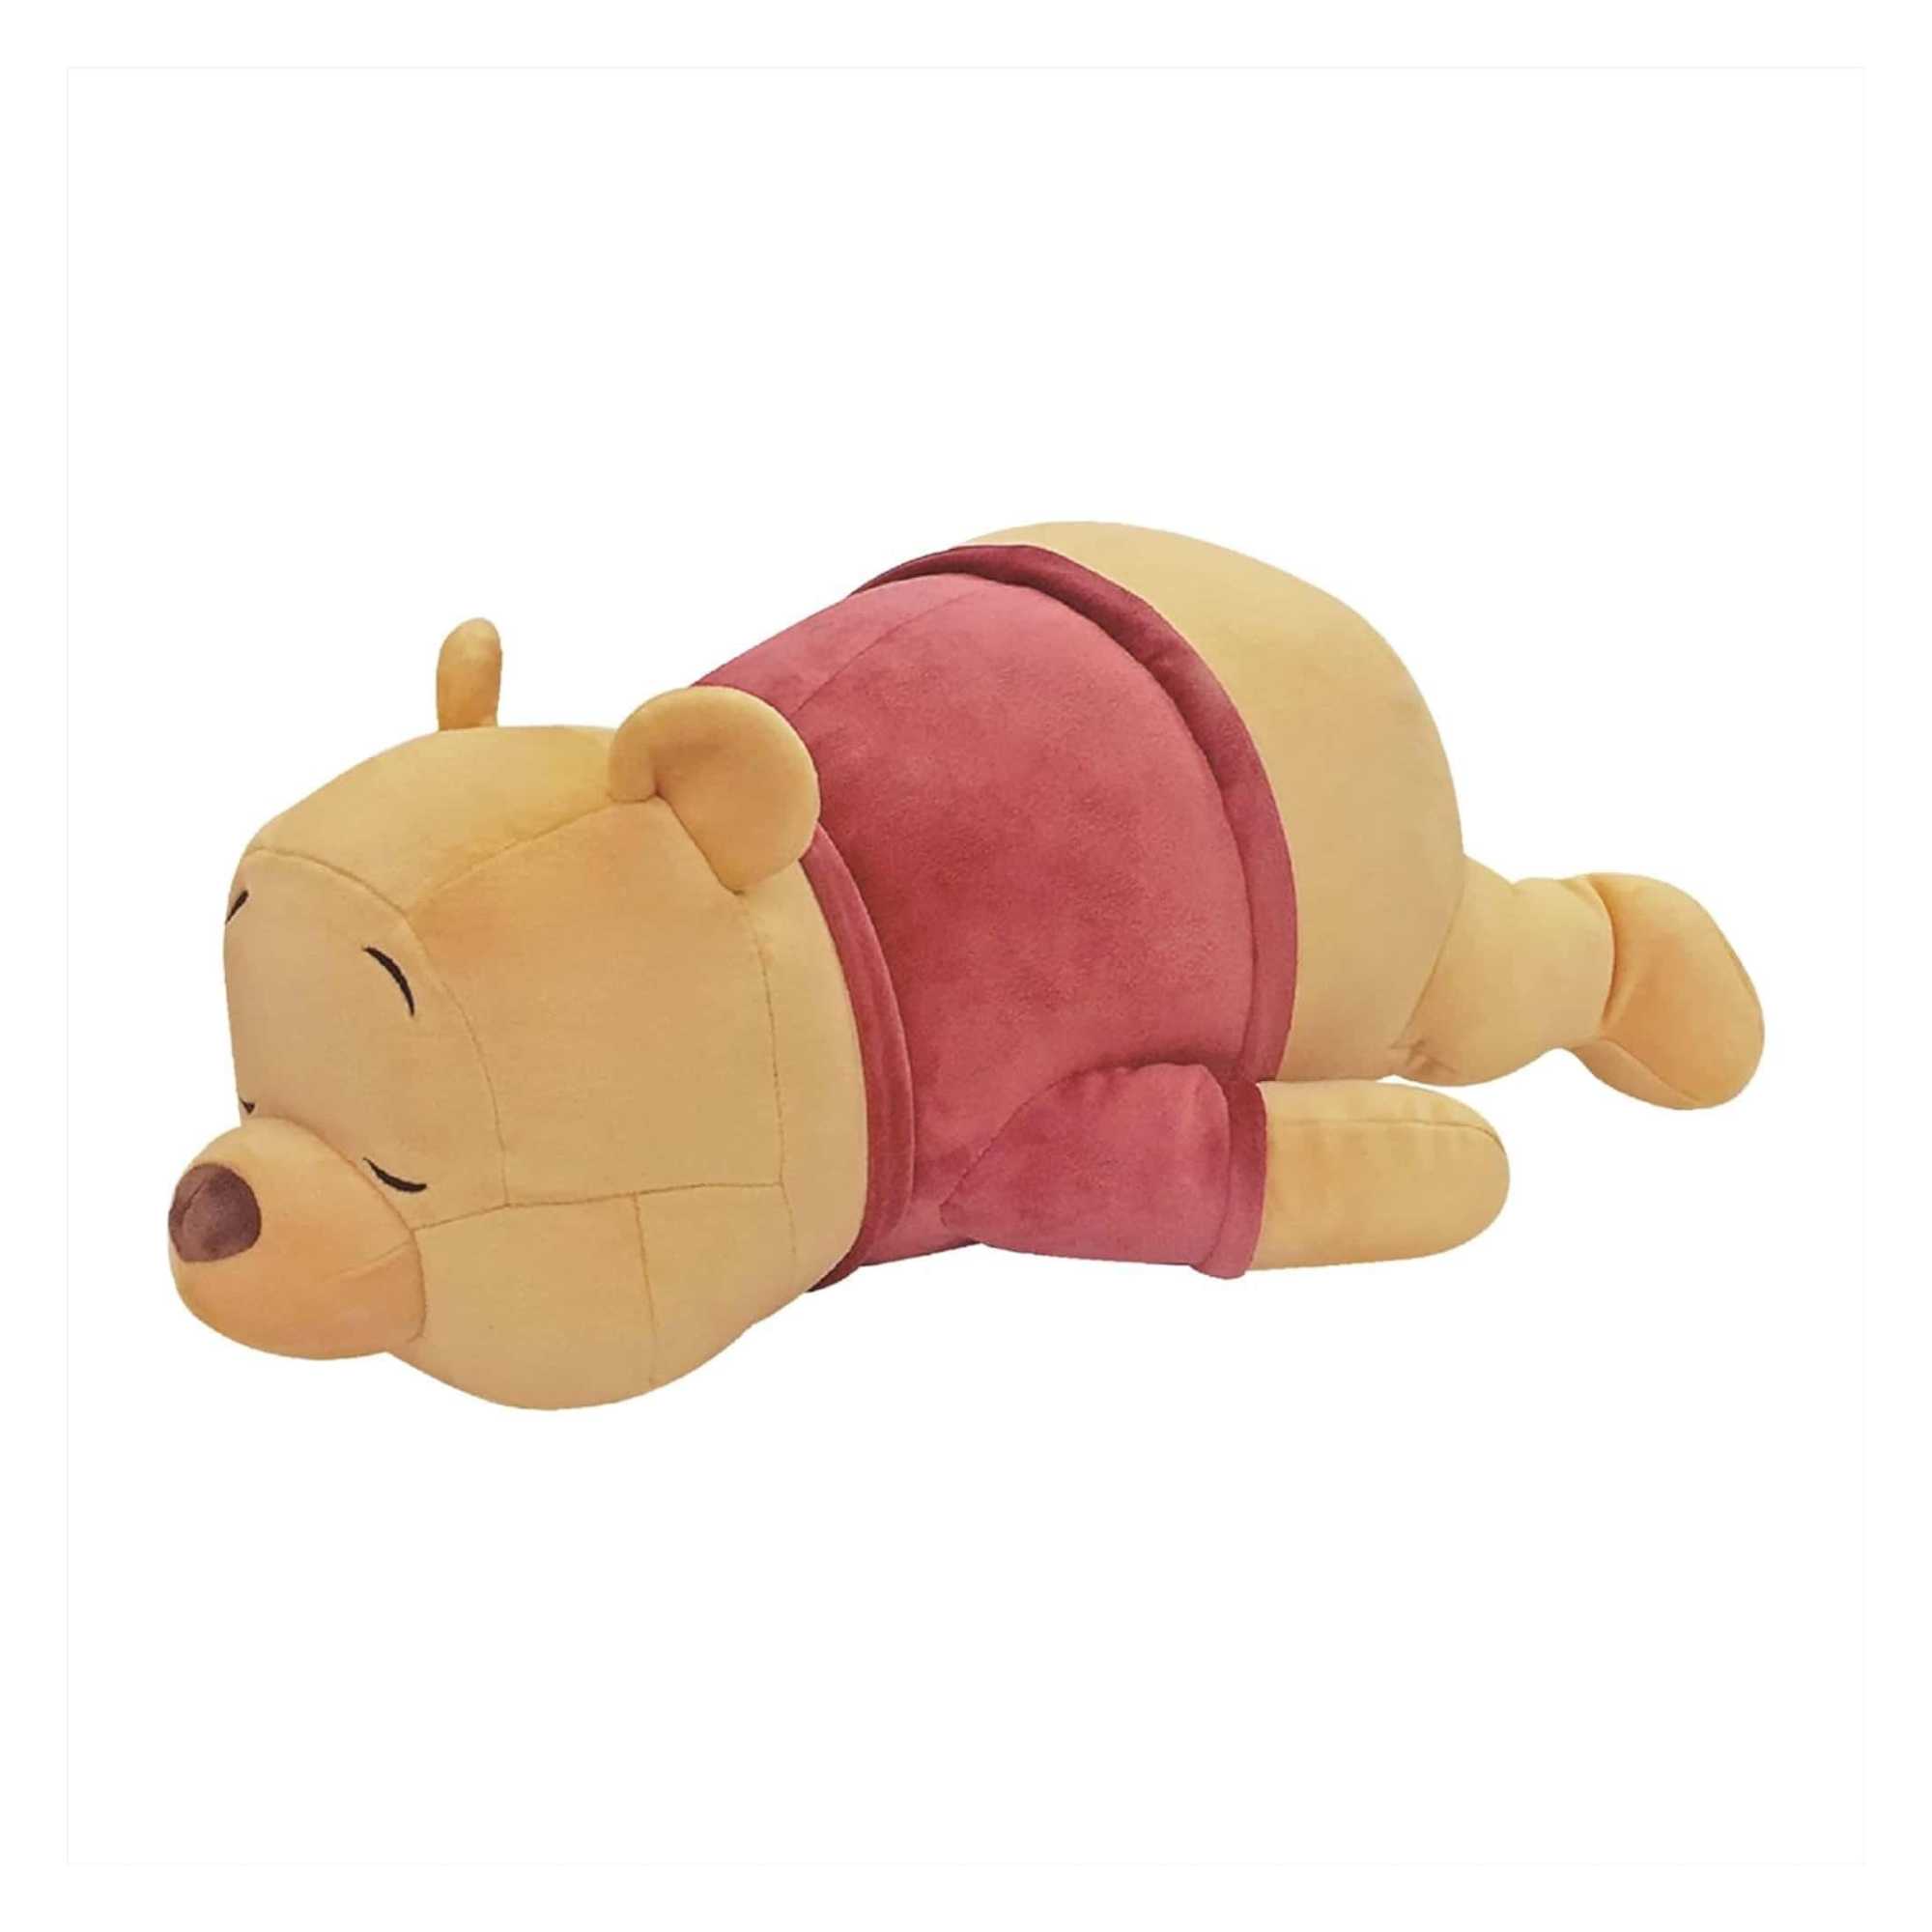 Livheart Disney Mochi Hug Pillow, Pooh